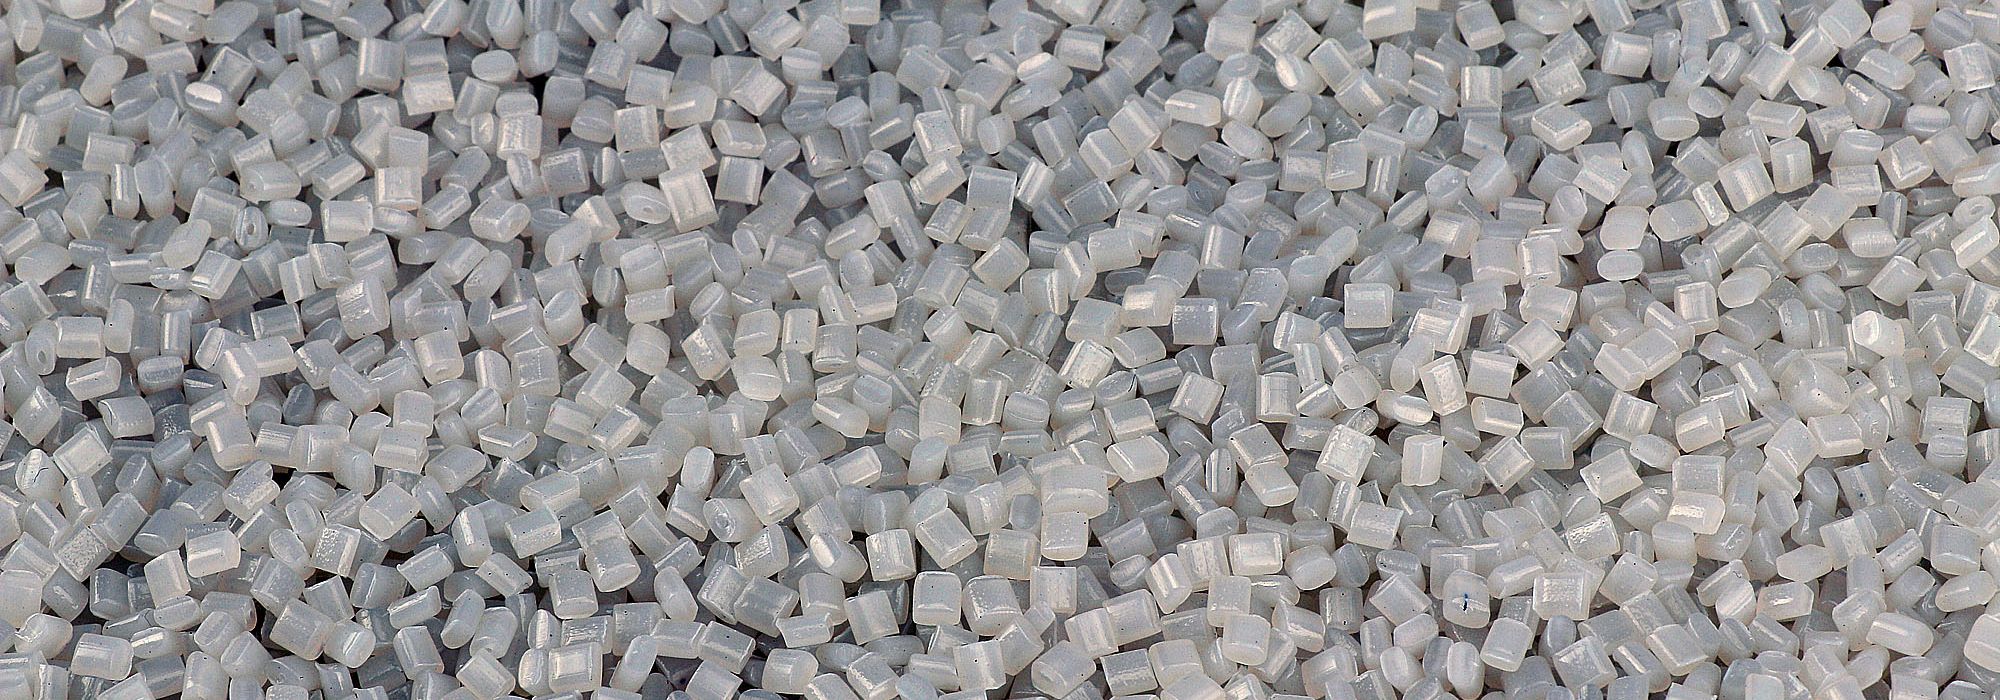 Kunststoff Rezyklat - Post Consumer Recycling r-HDPE - High-Density Polyethylen